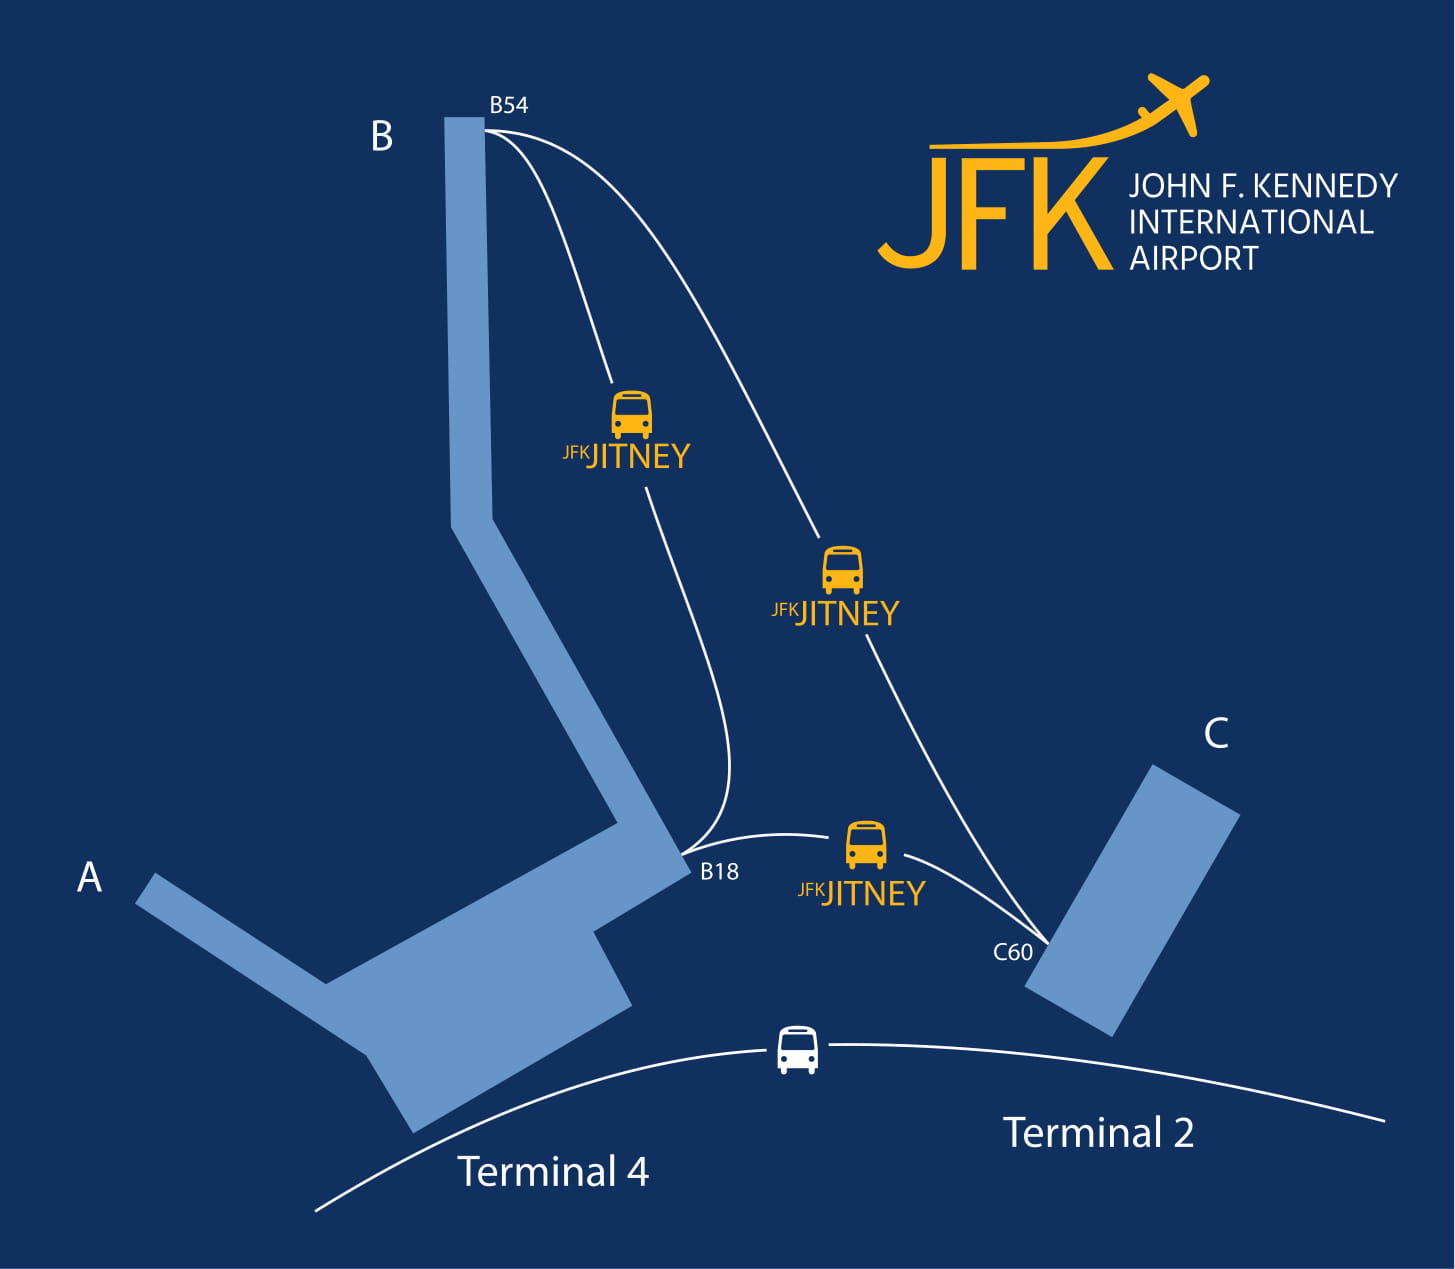 jfk arriving flights terminal 2